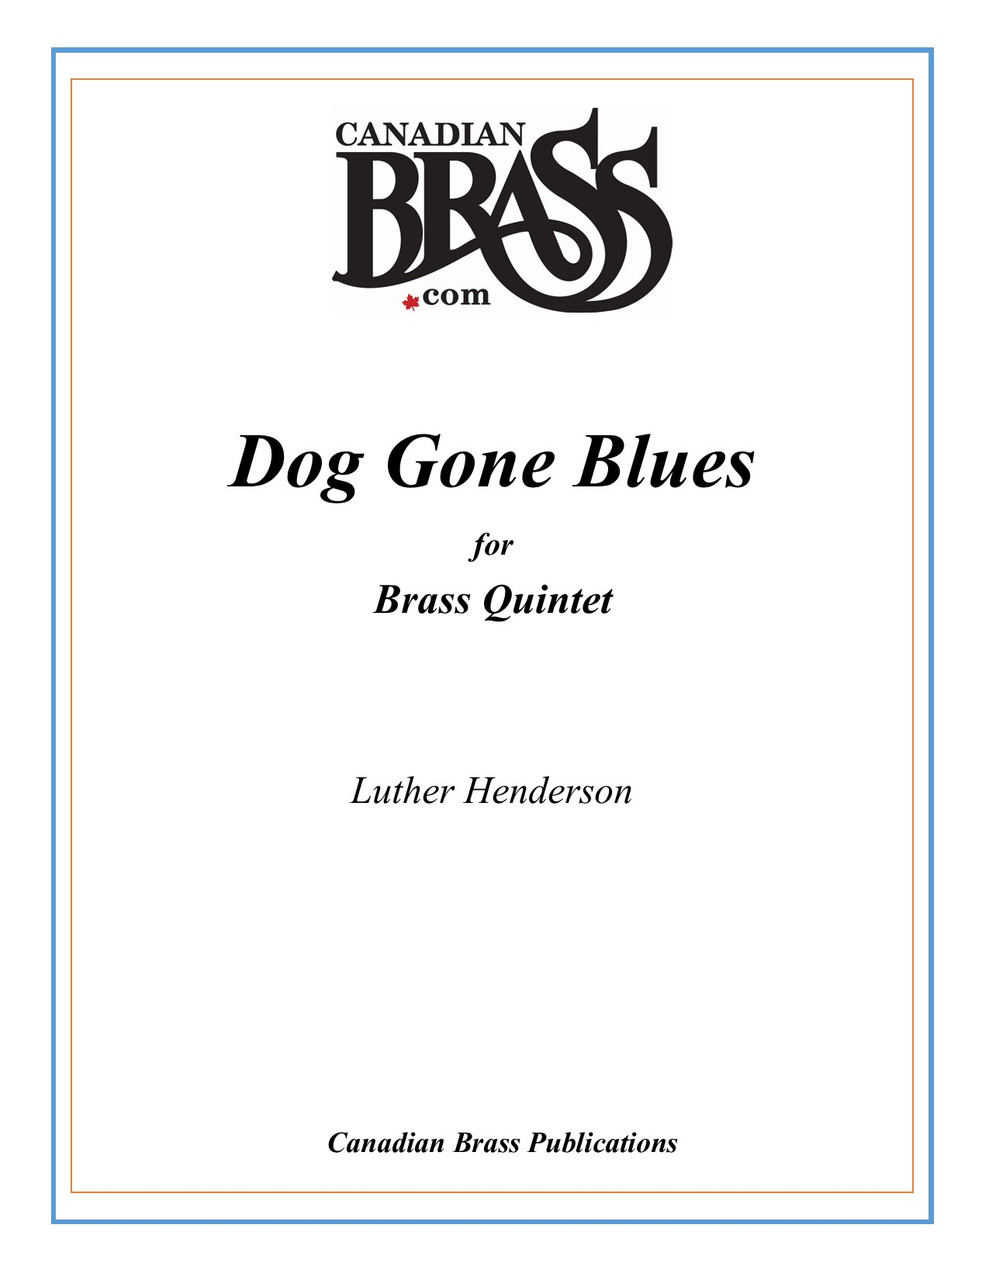 Dog Gone Blues Brass Quintet (Luther Henderson) PDF Download